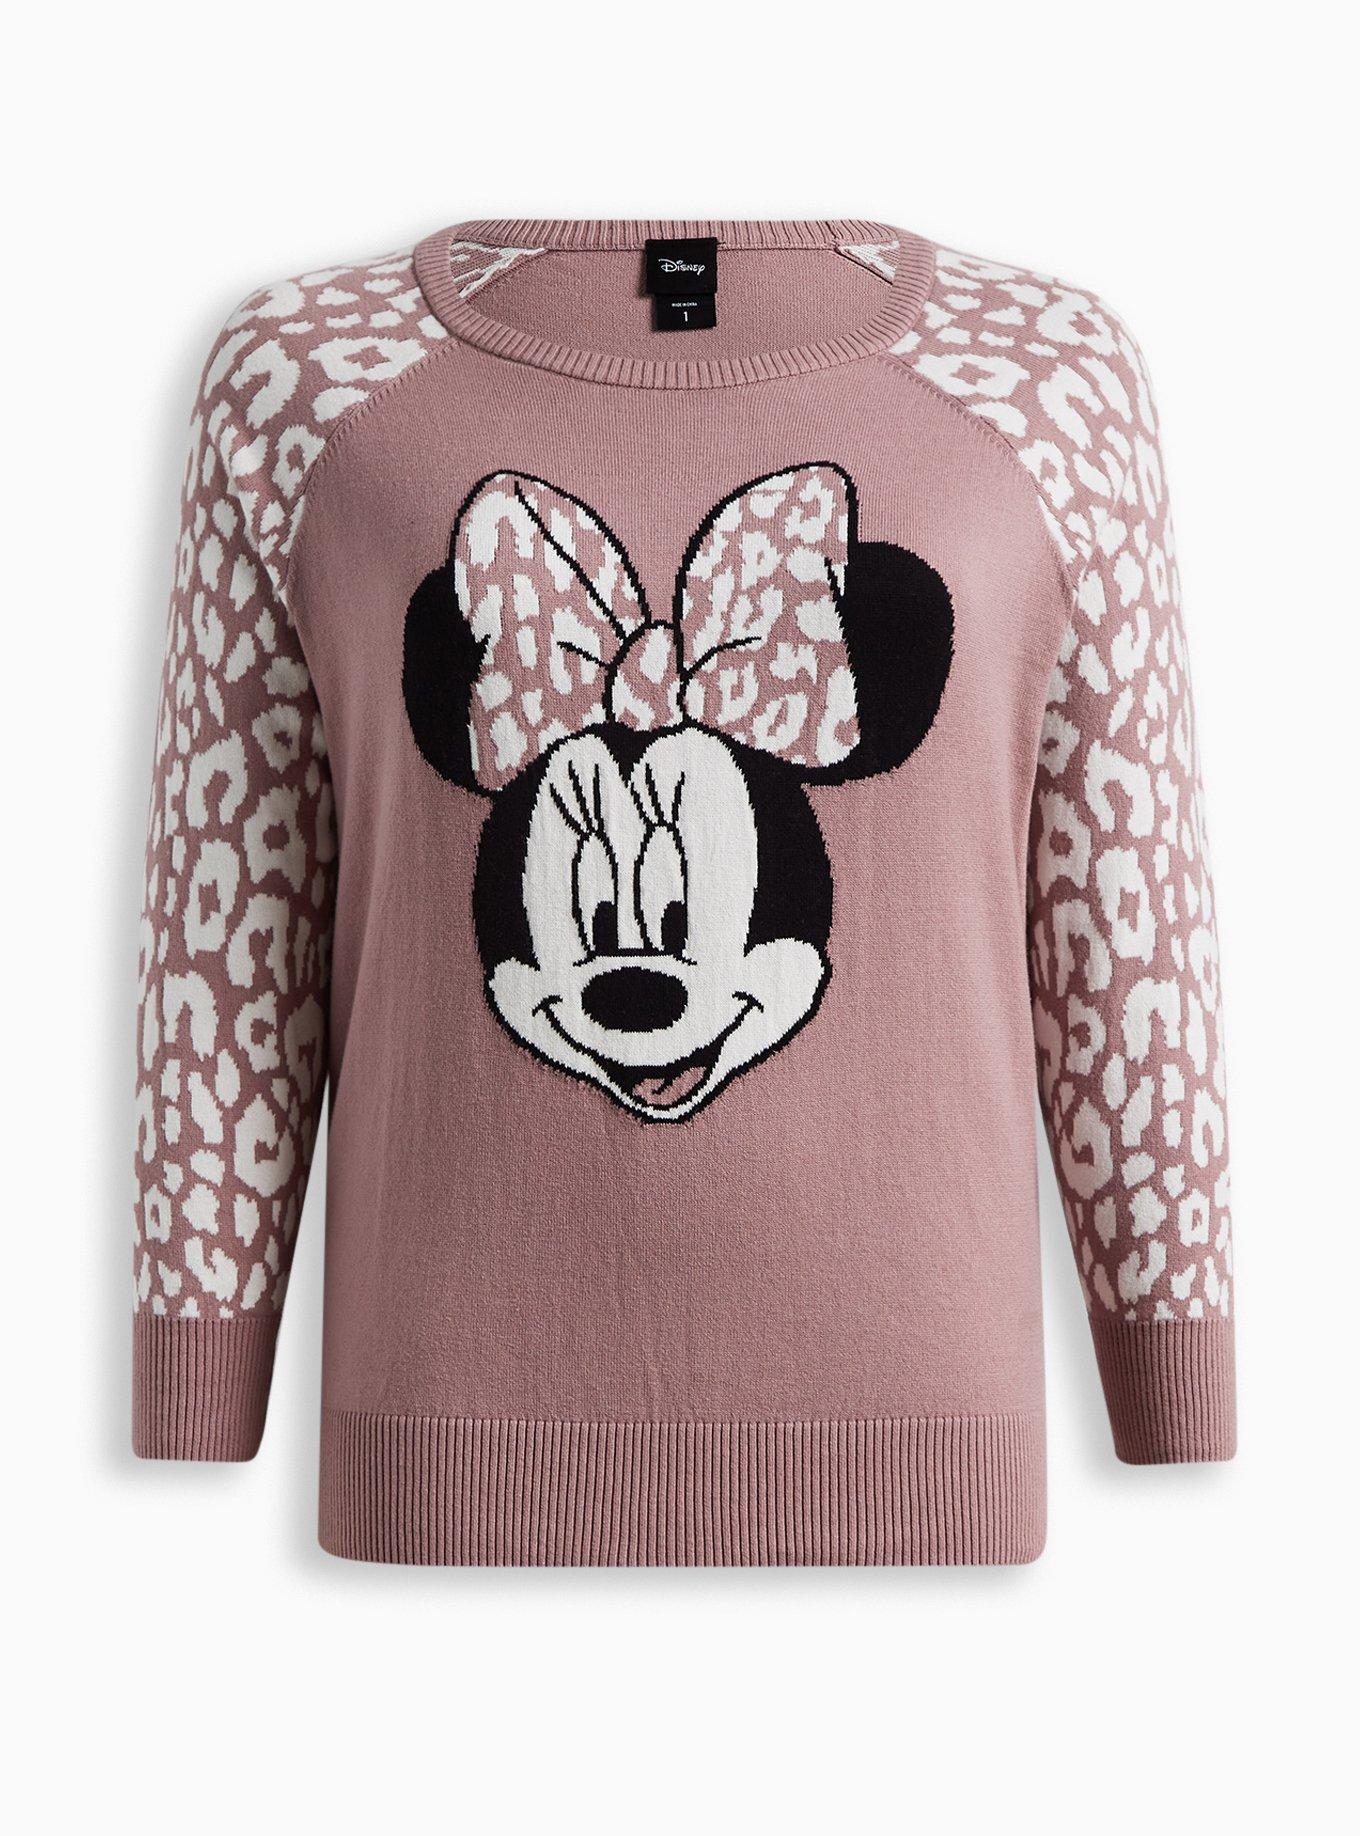 Minnie Mouse Disney Leopard Crop Top Sweatshirt for Women, Cheetah